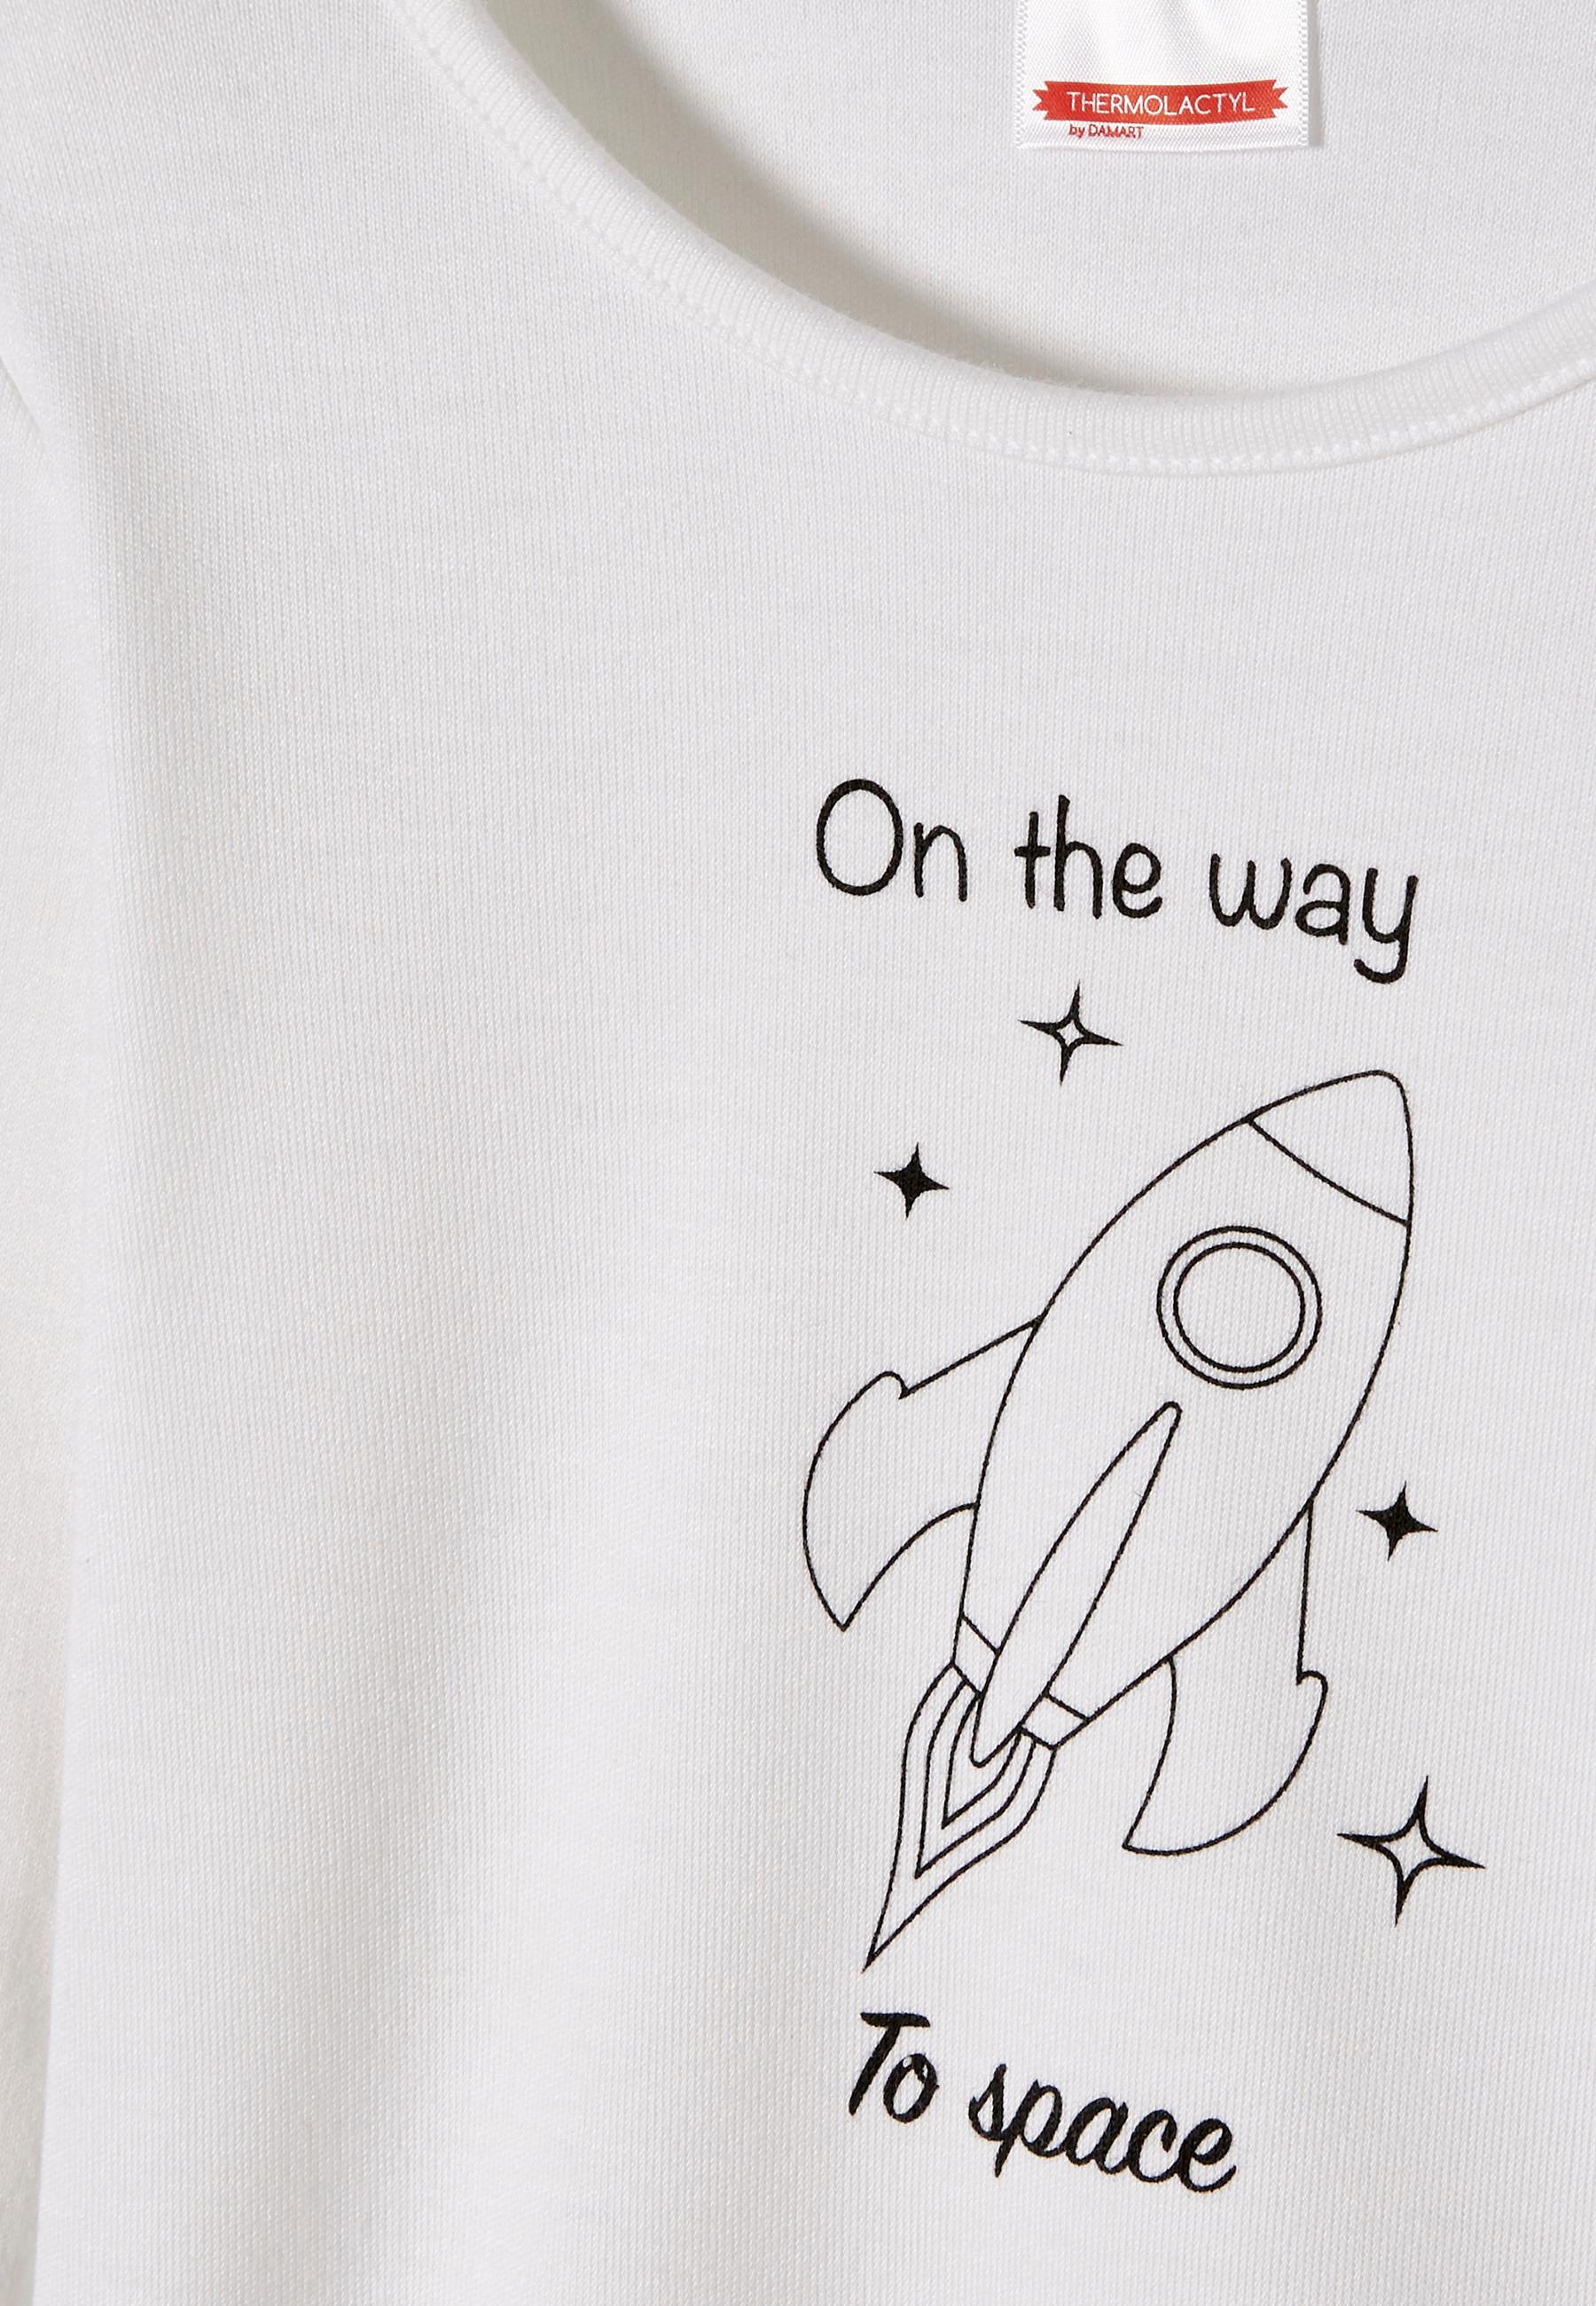 Damart  Tee-shirt garçon On the way to space (en route vers l'espace). 